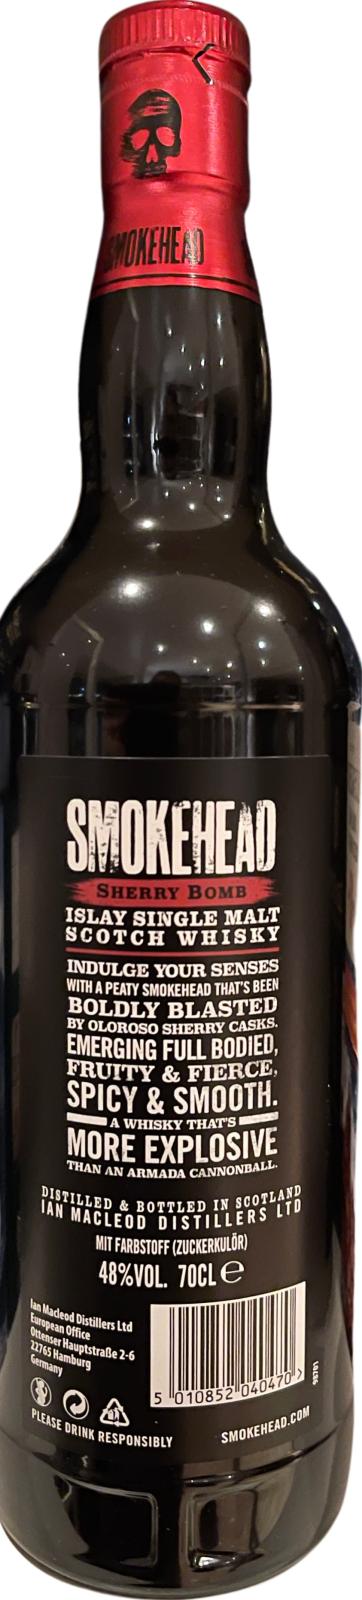 Smokehead Sherry Bomb IM